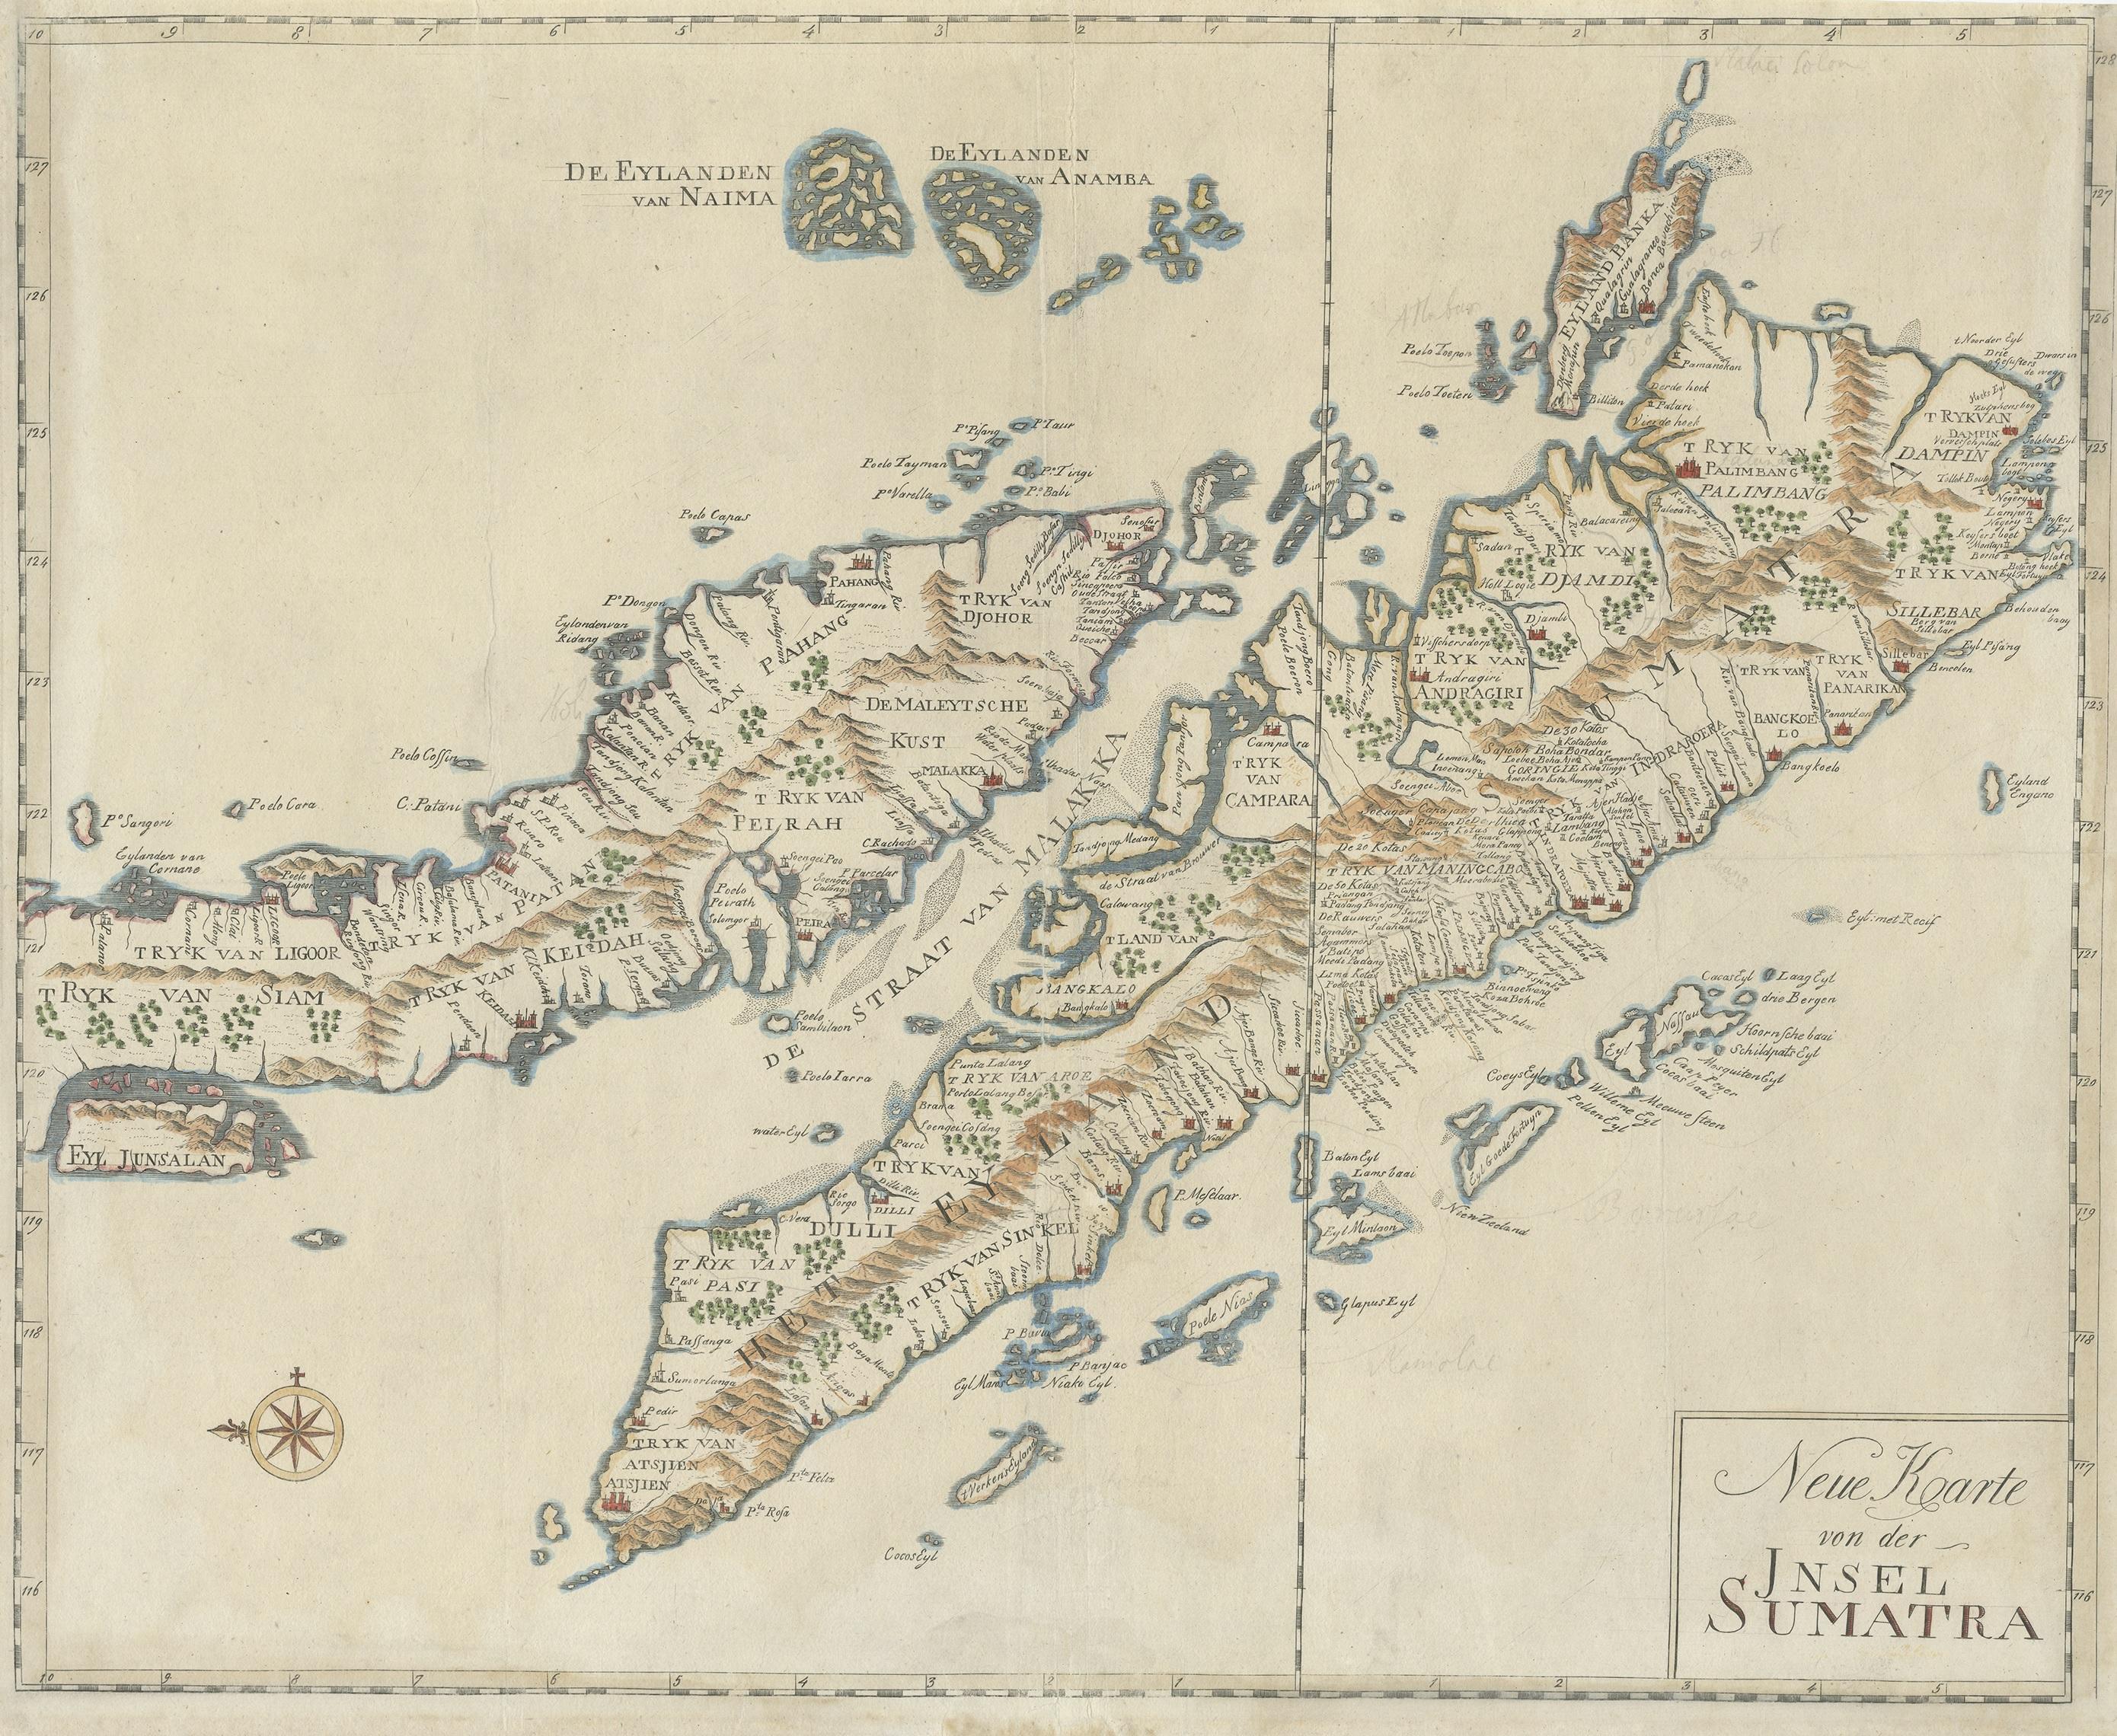 Antique map titled 'Neue Karte von der Insel Sumatra'. Extremely rare map of Sumatra, Indonesia. Published circa 1780.